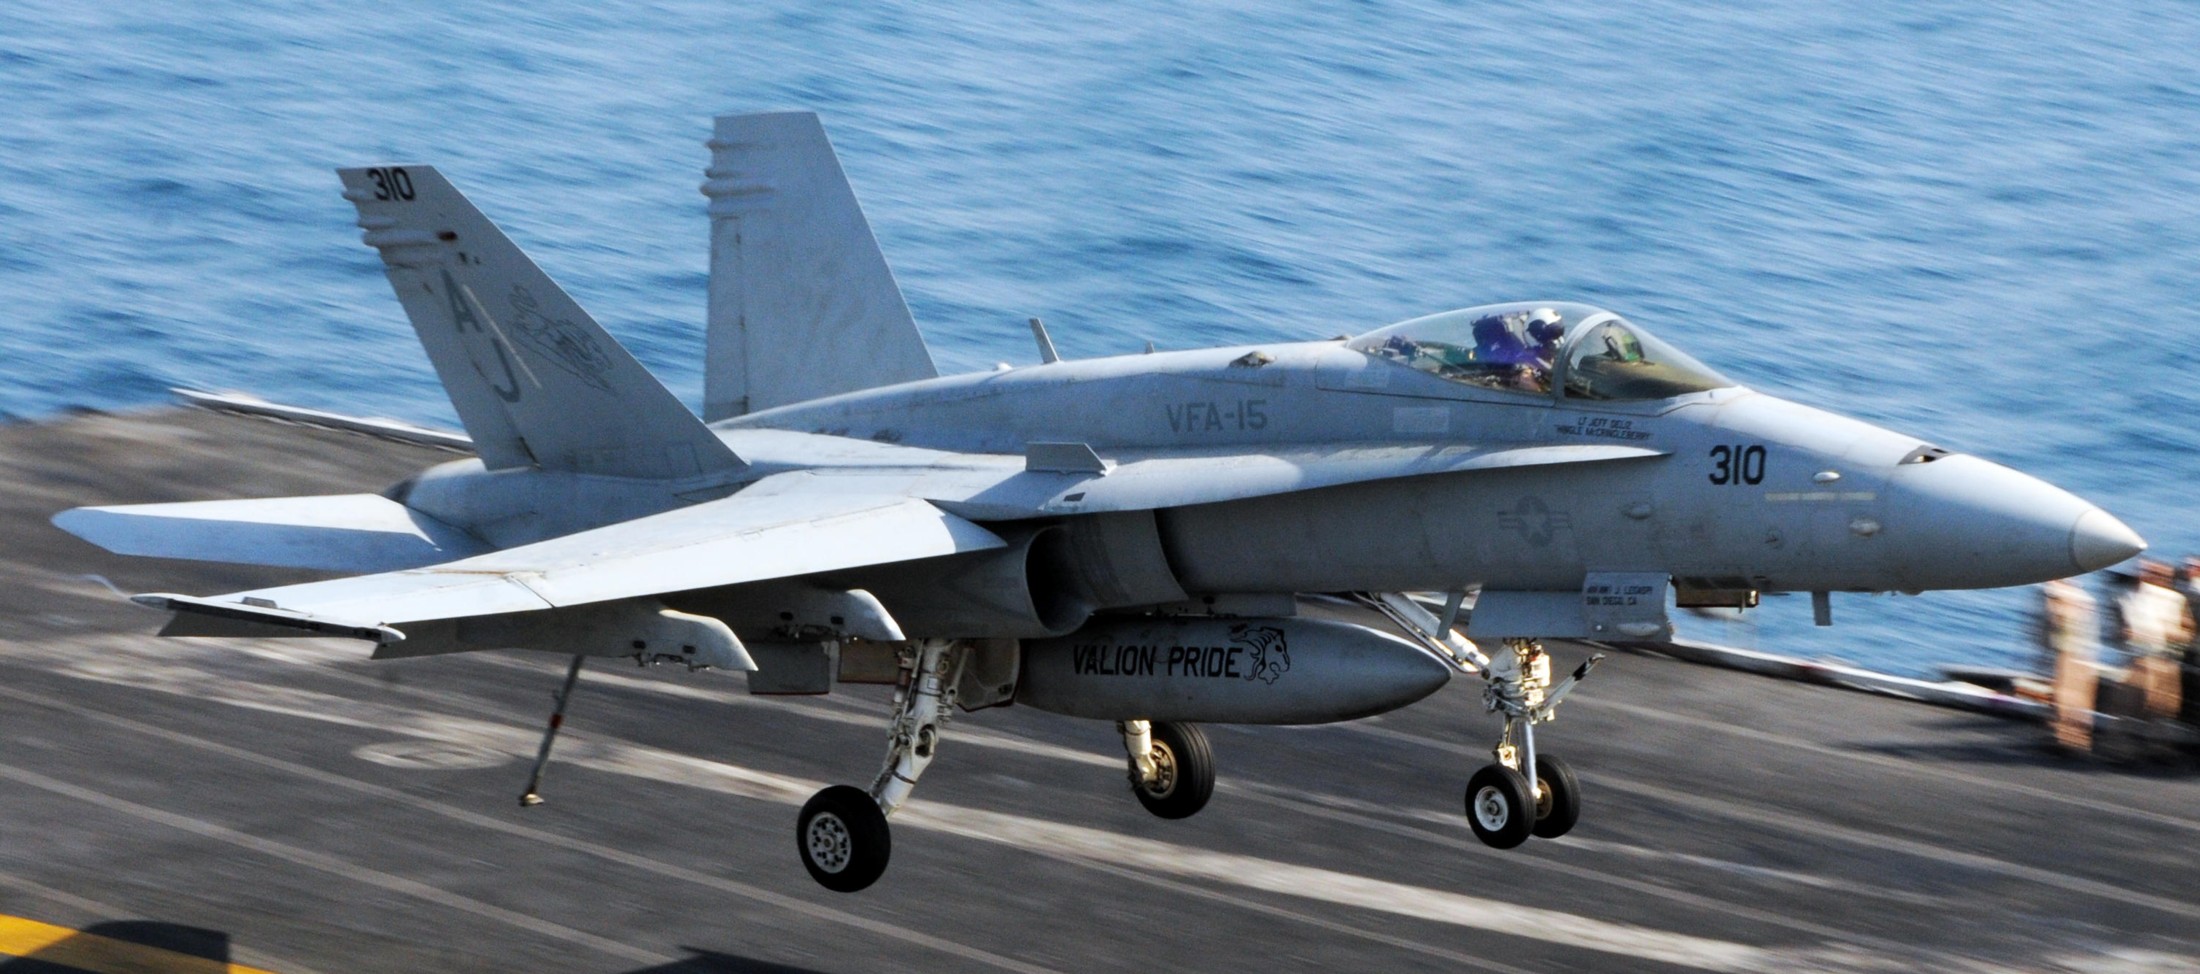 vfa-15 valions strike fighter squadron f/a-18c hornet cvn-77 uss george h. w. bush cvw-8 us navy 46p